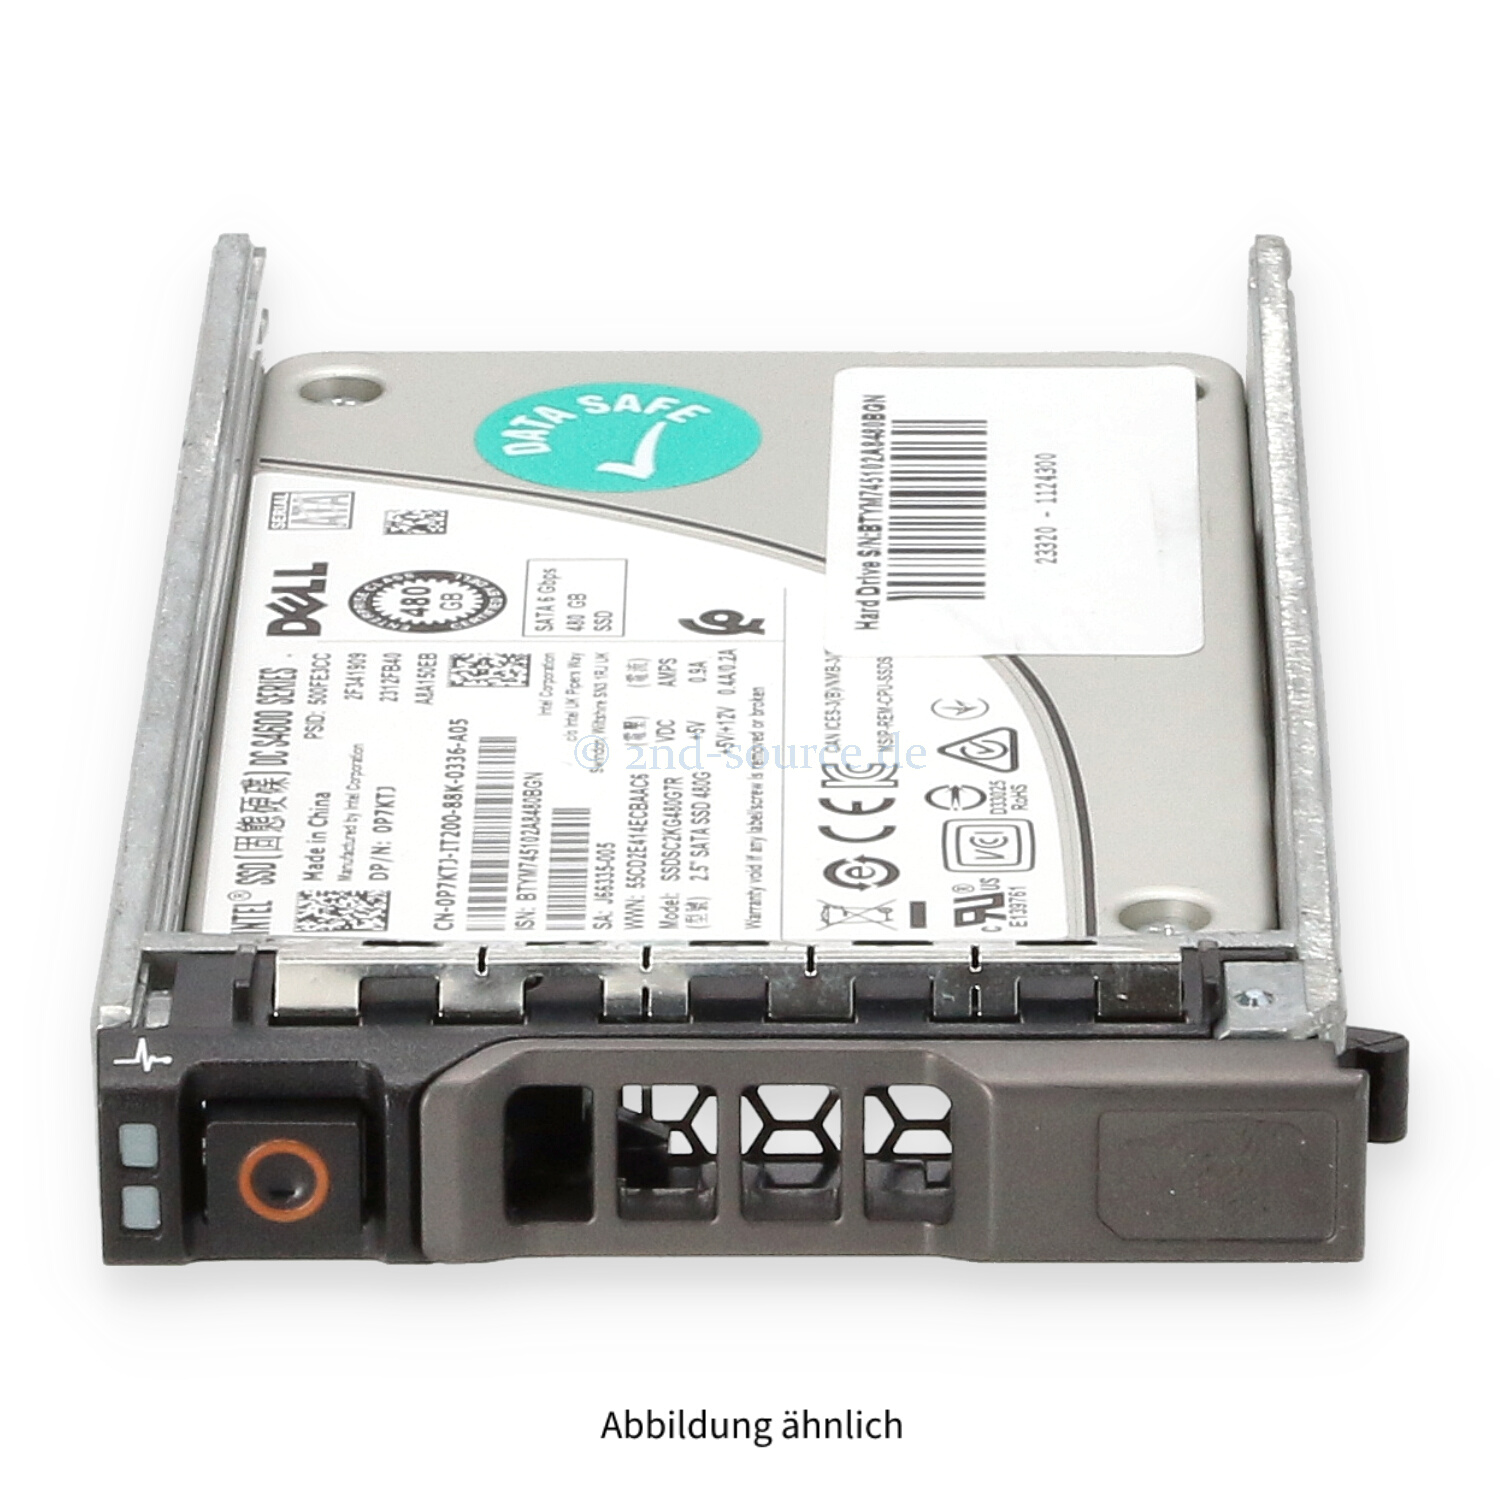 Dell 480GB SATA 6G SFF Mixed Use HotPlug SSD P7KTJ 0P7KTJ